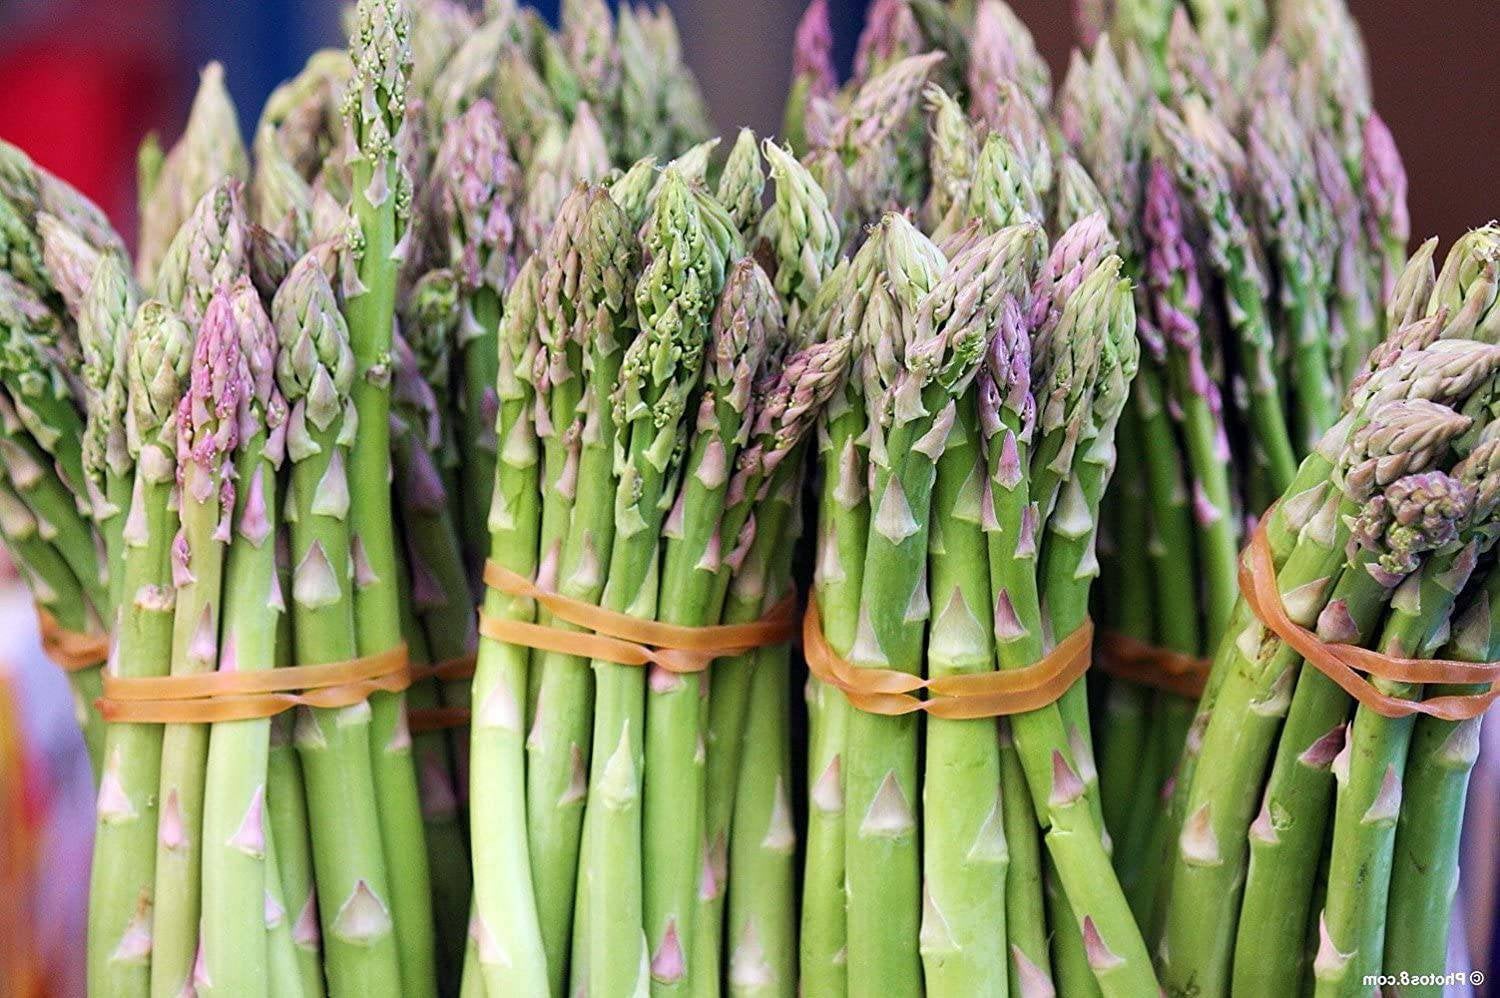 Asparagus - Mary Washington IMP Seeds Non-GMO (100+ Seeds)